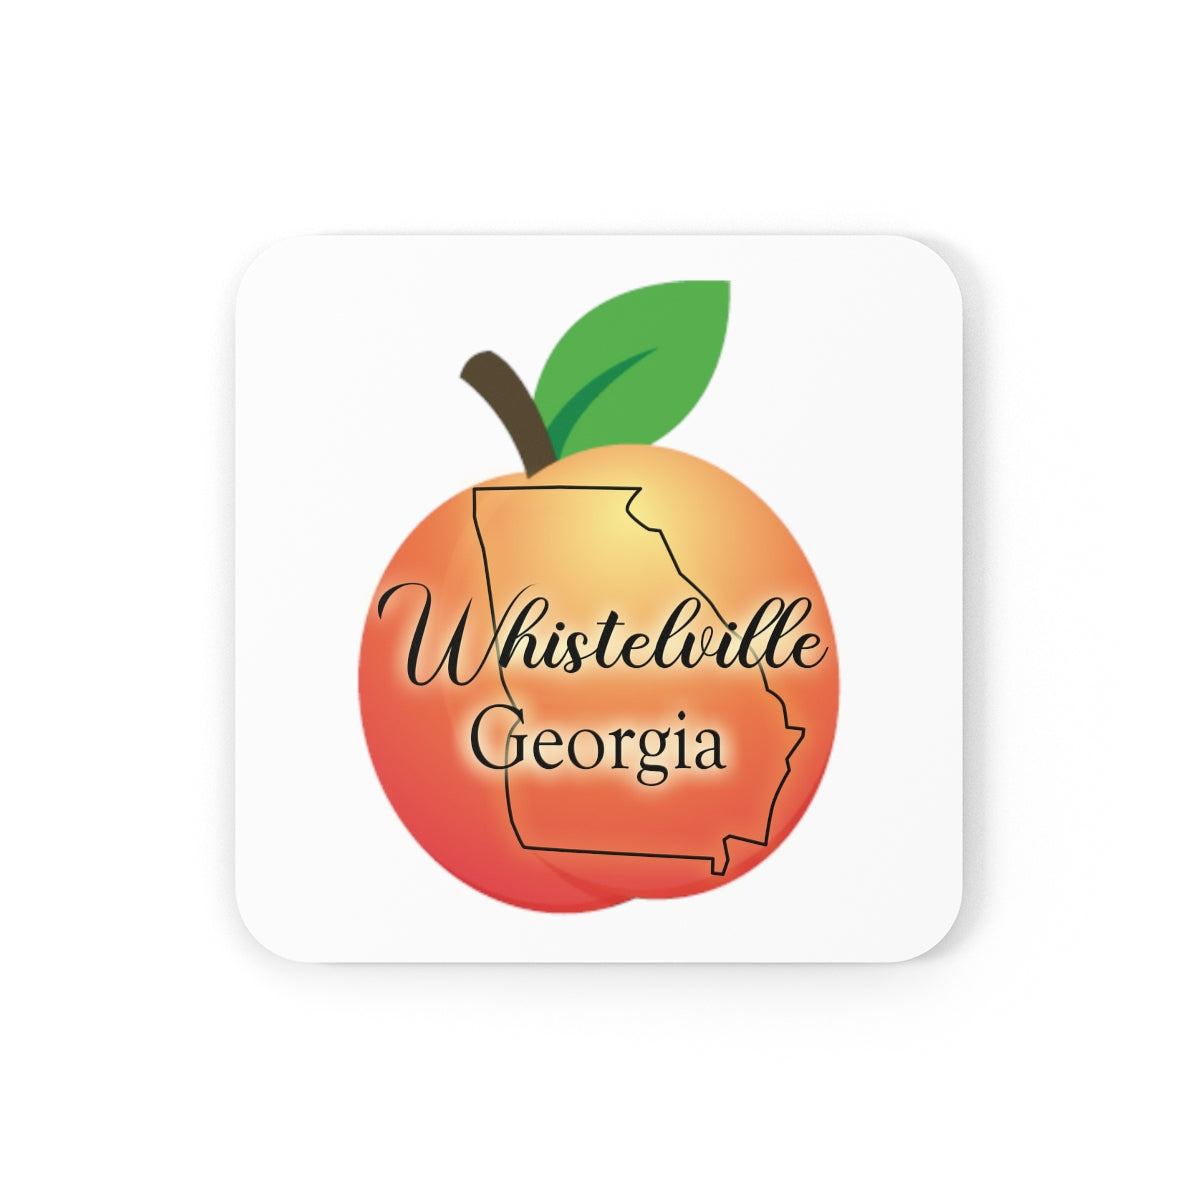 Whistelville Georgia Corkwood Coaster Set